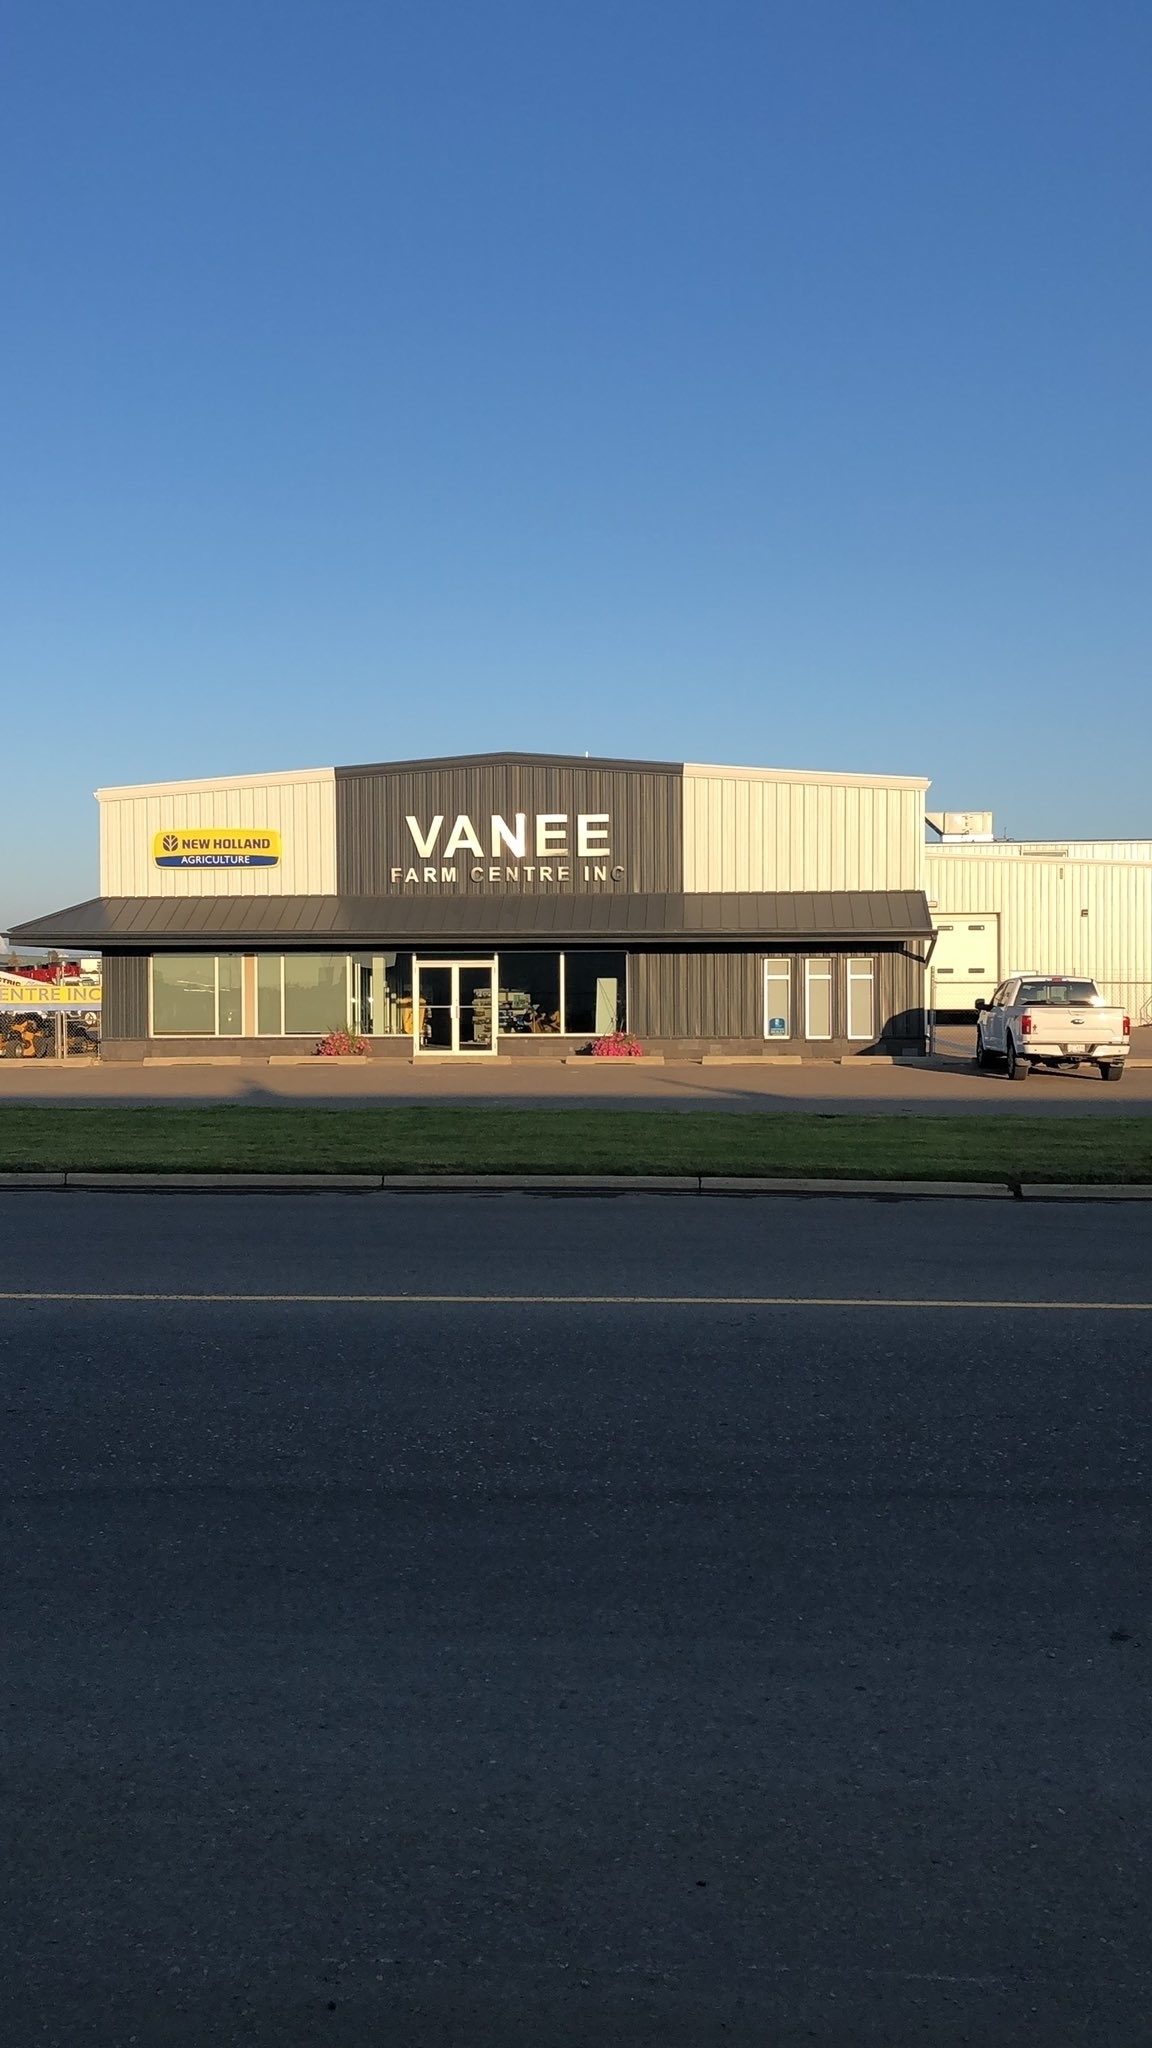 Vanee Farm Centre Inc